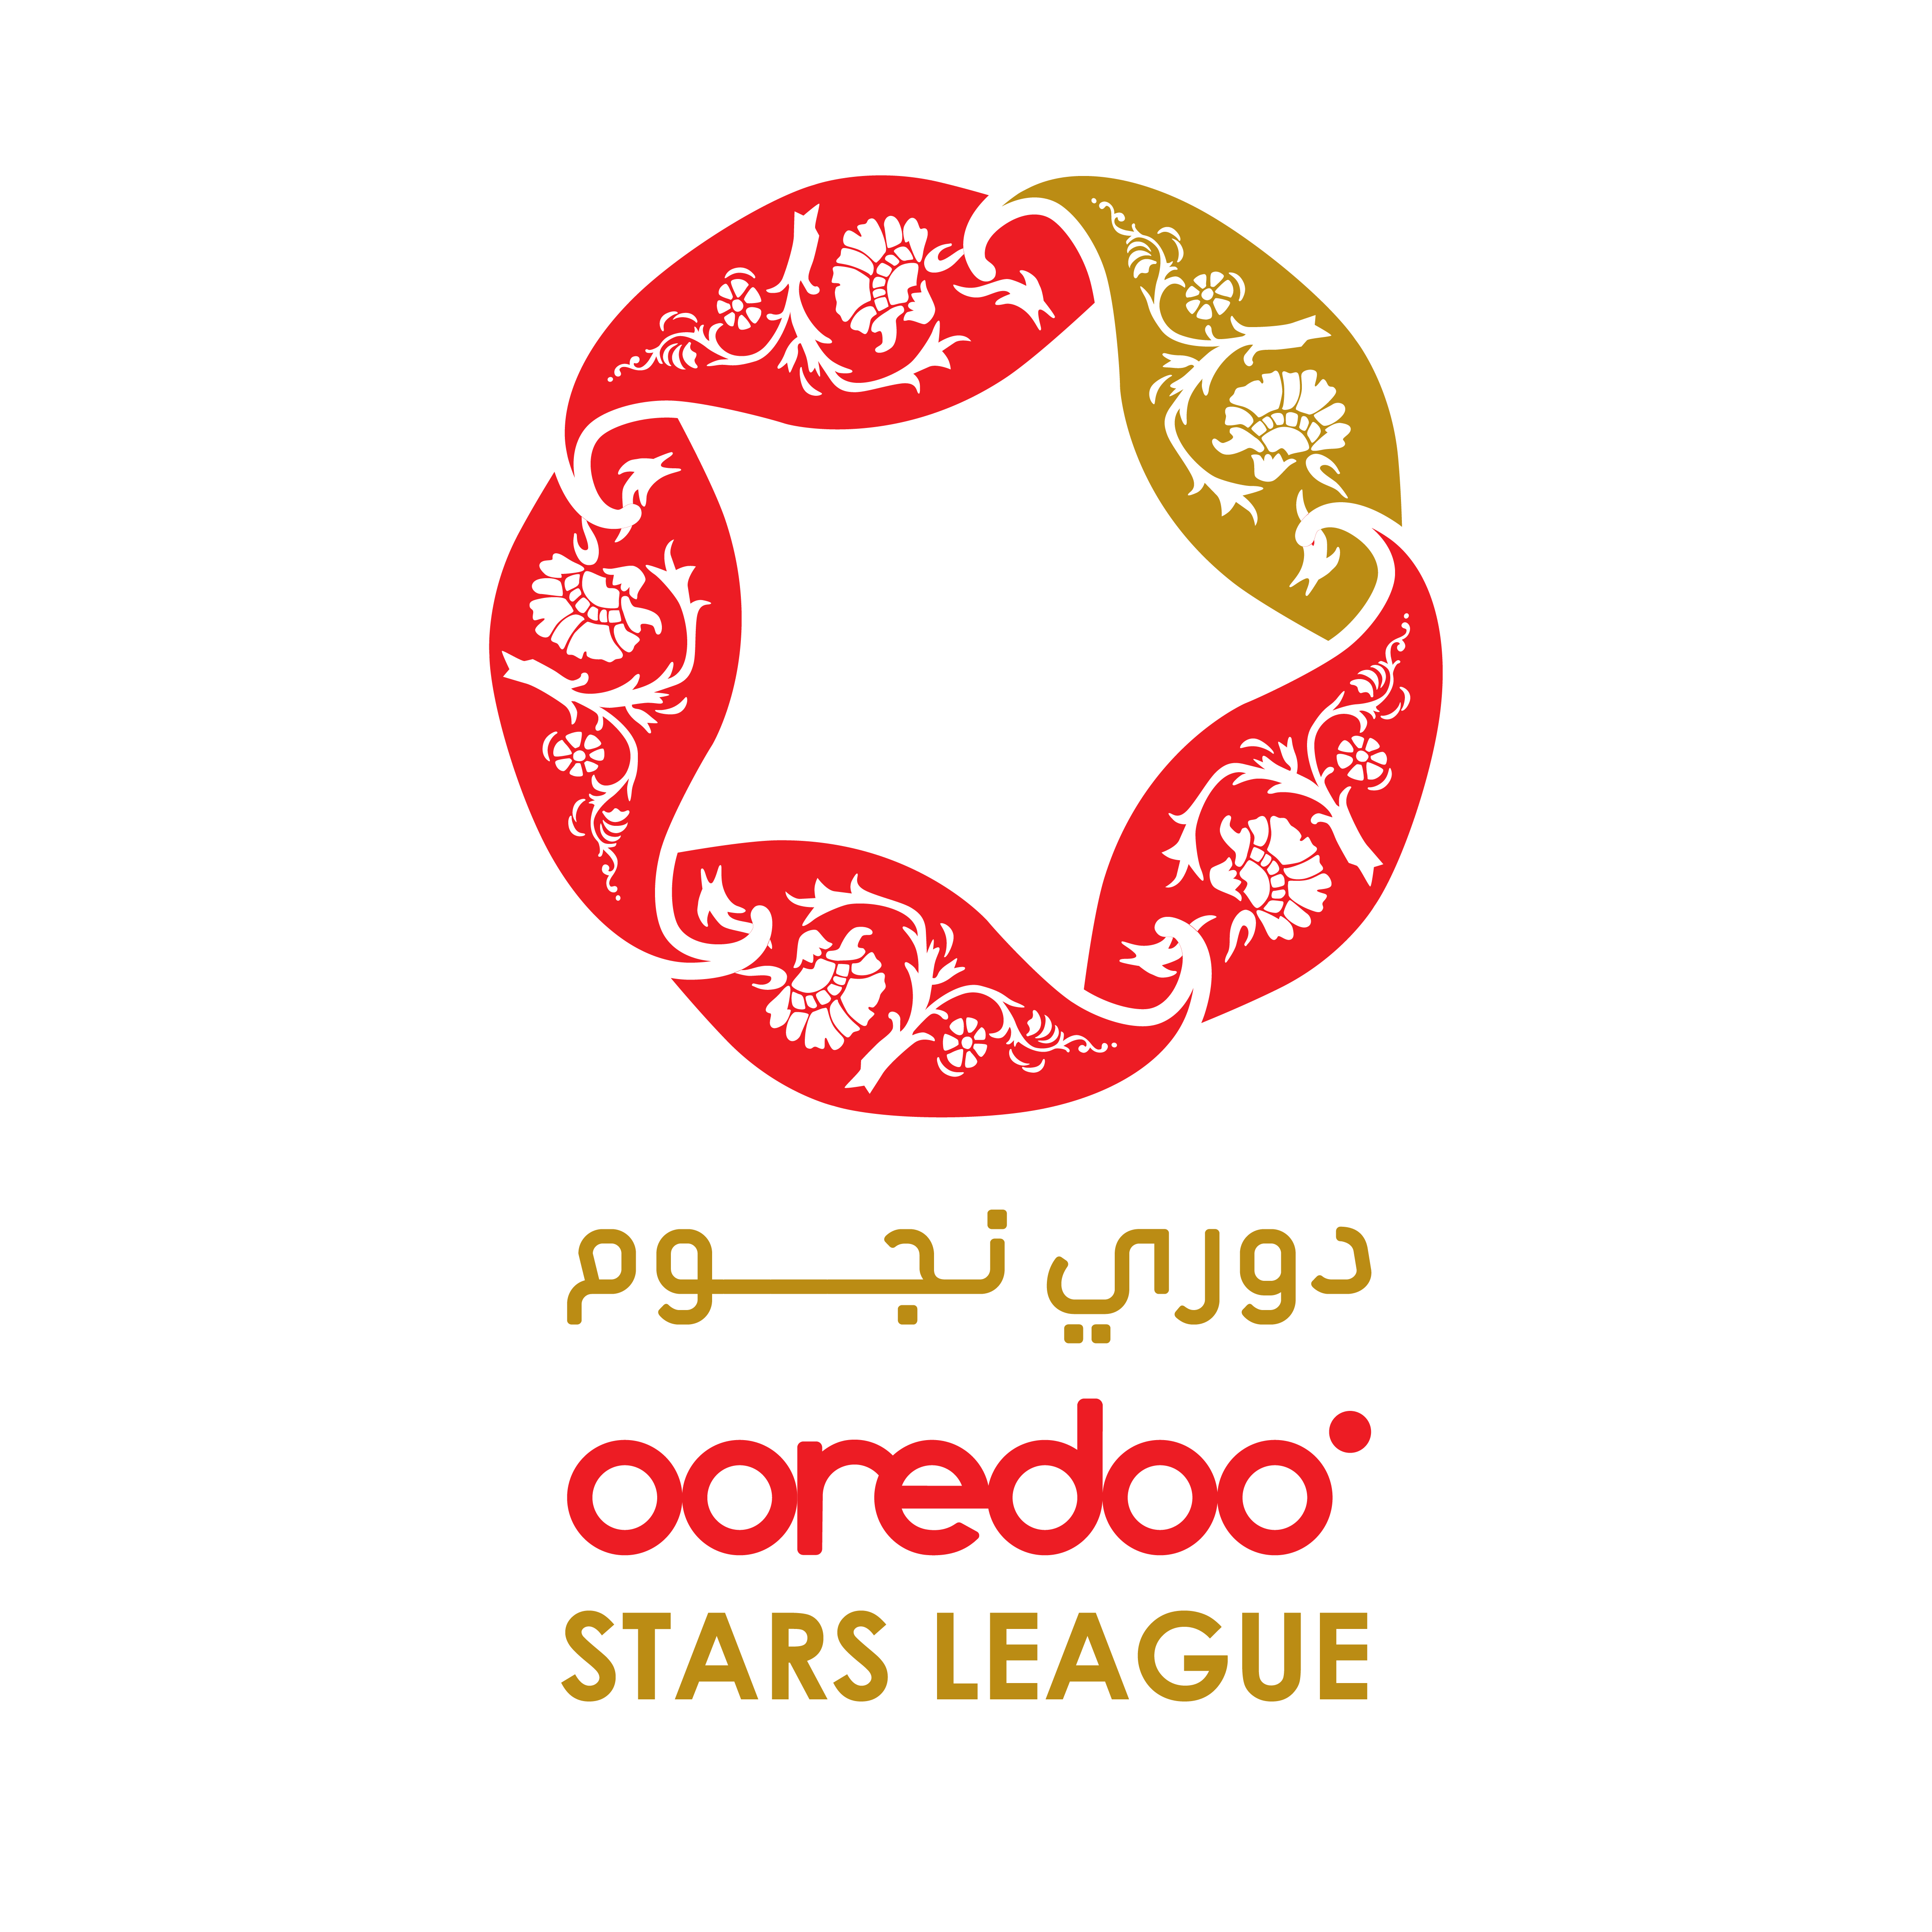 Ooredoo Stars League